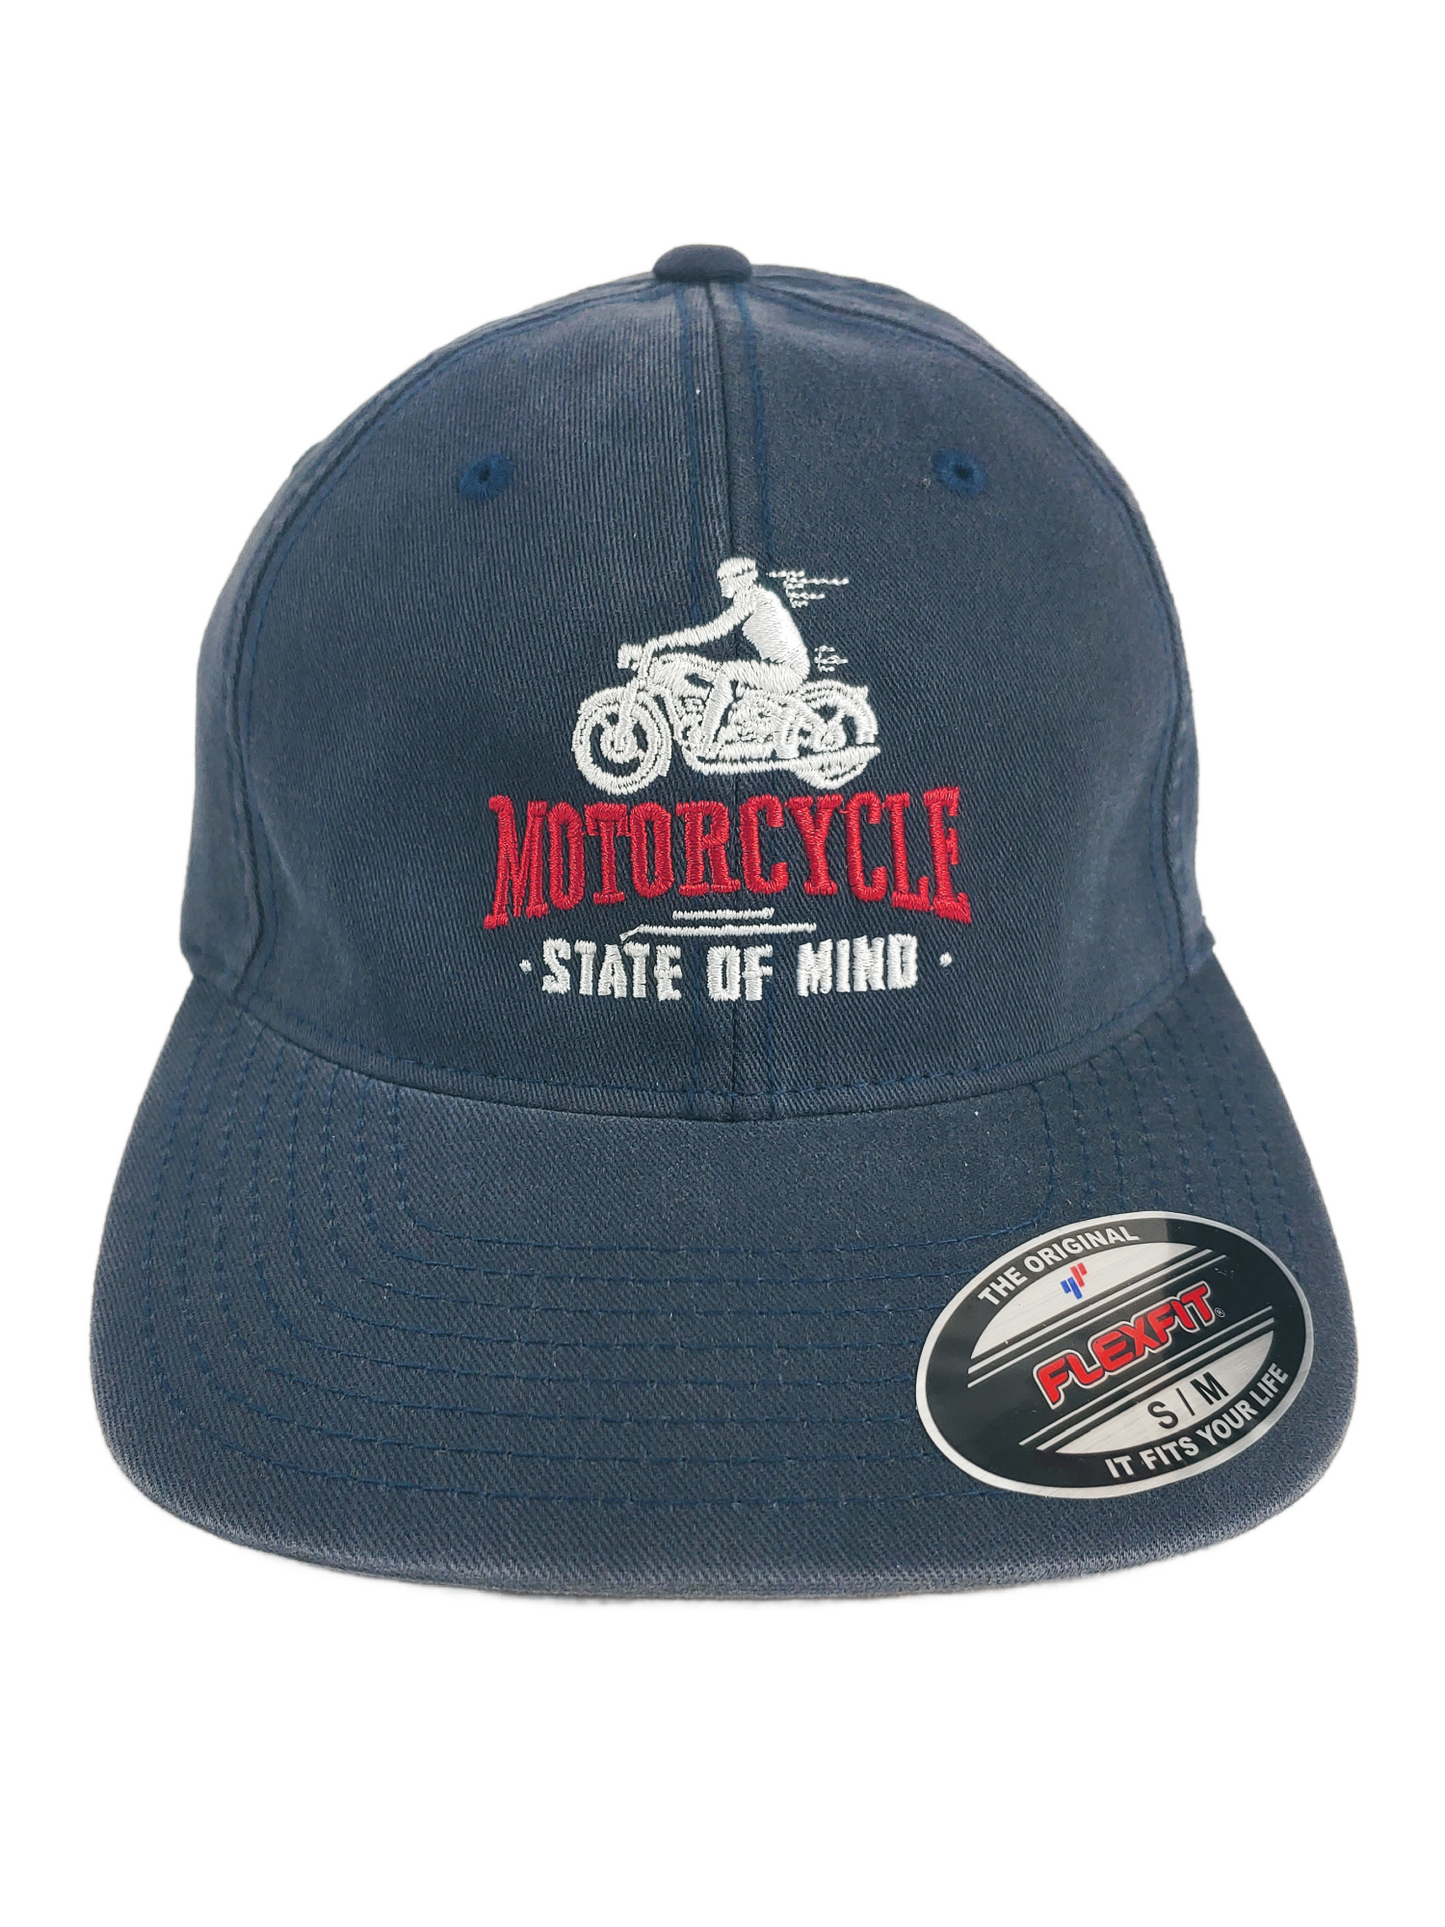 Motorcycle State of Mind - Dark Denim - Flex Fit - Baseball Style Hat